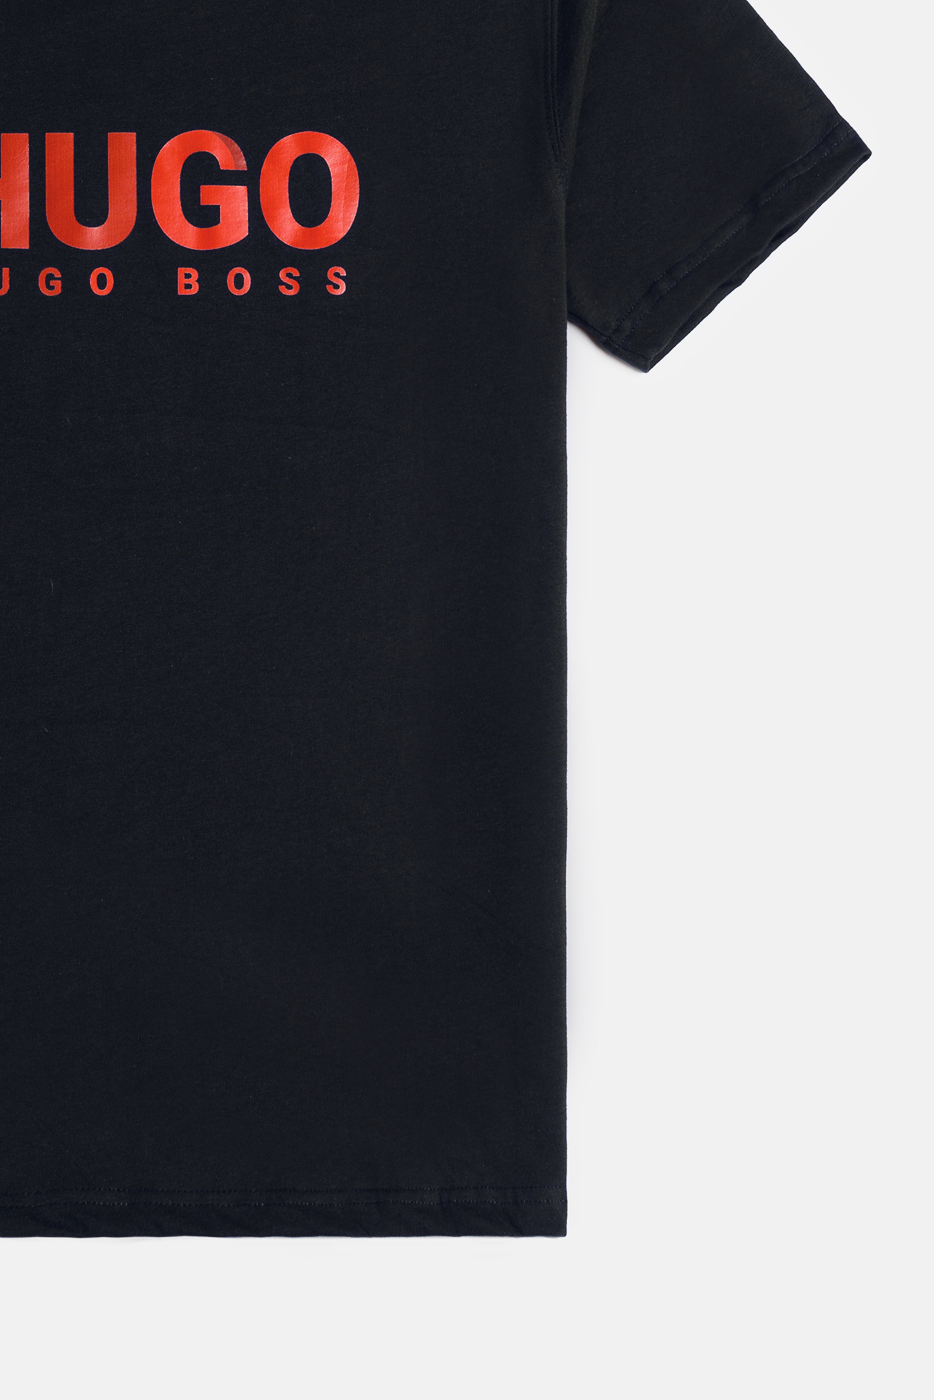 HB Imported Print T Shirt – Black